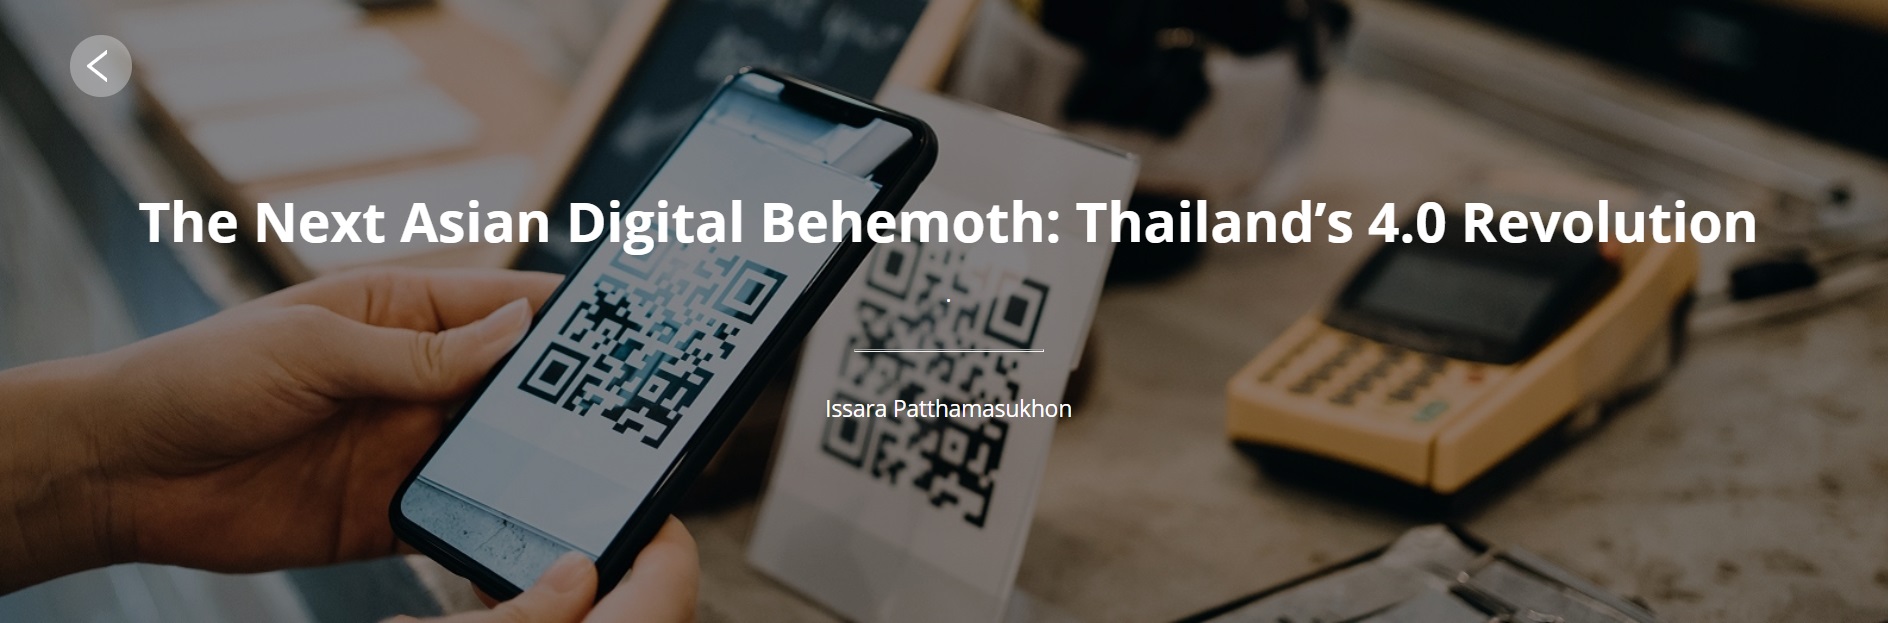 The_Next_Asian_Digital_Behemoth